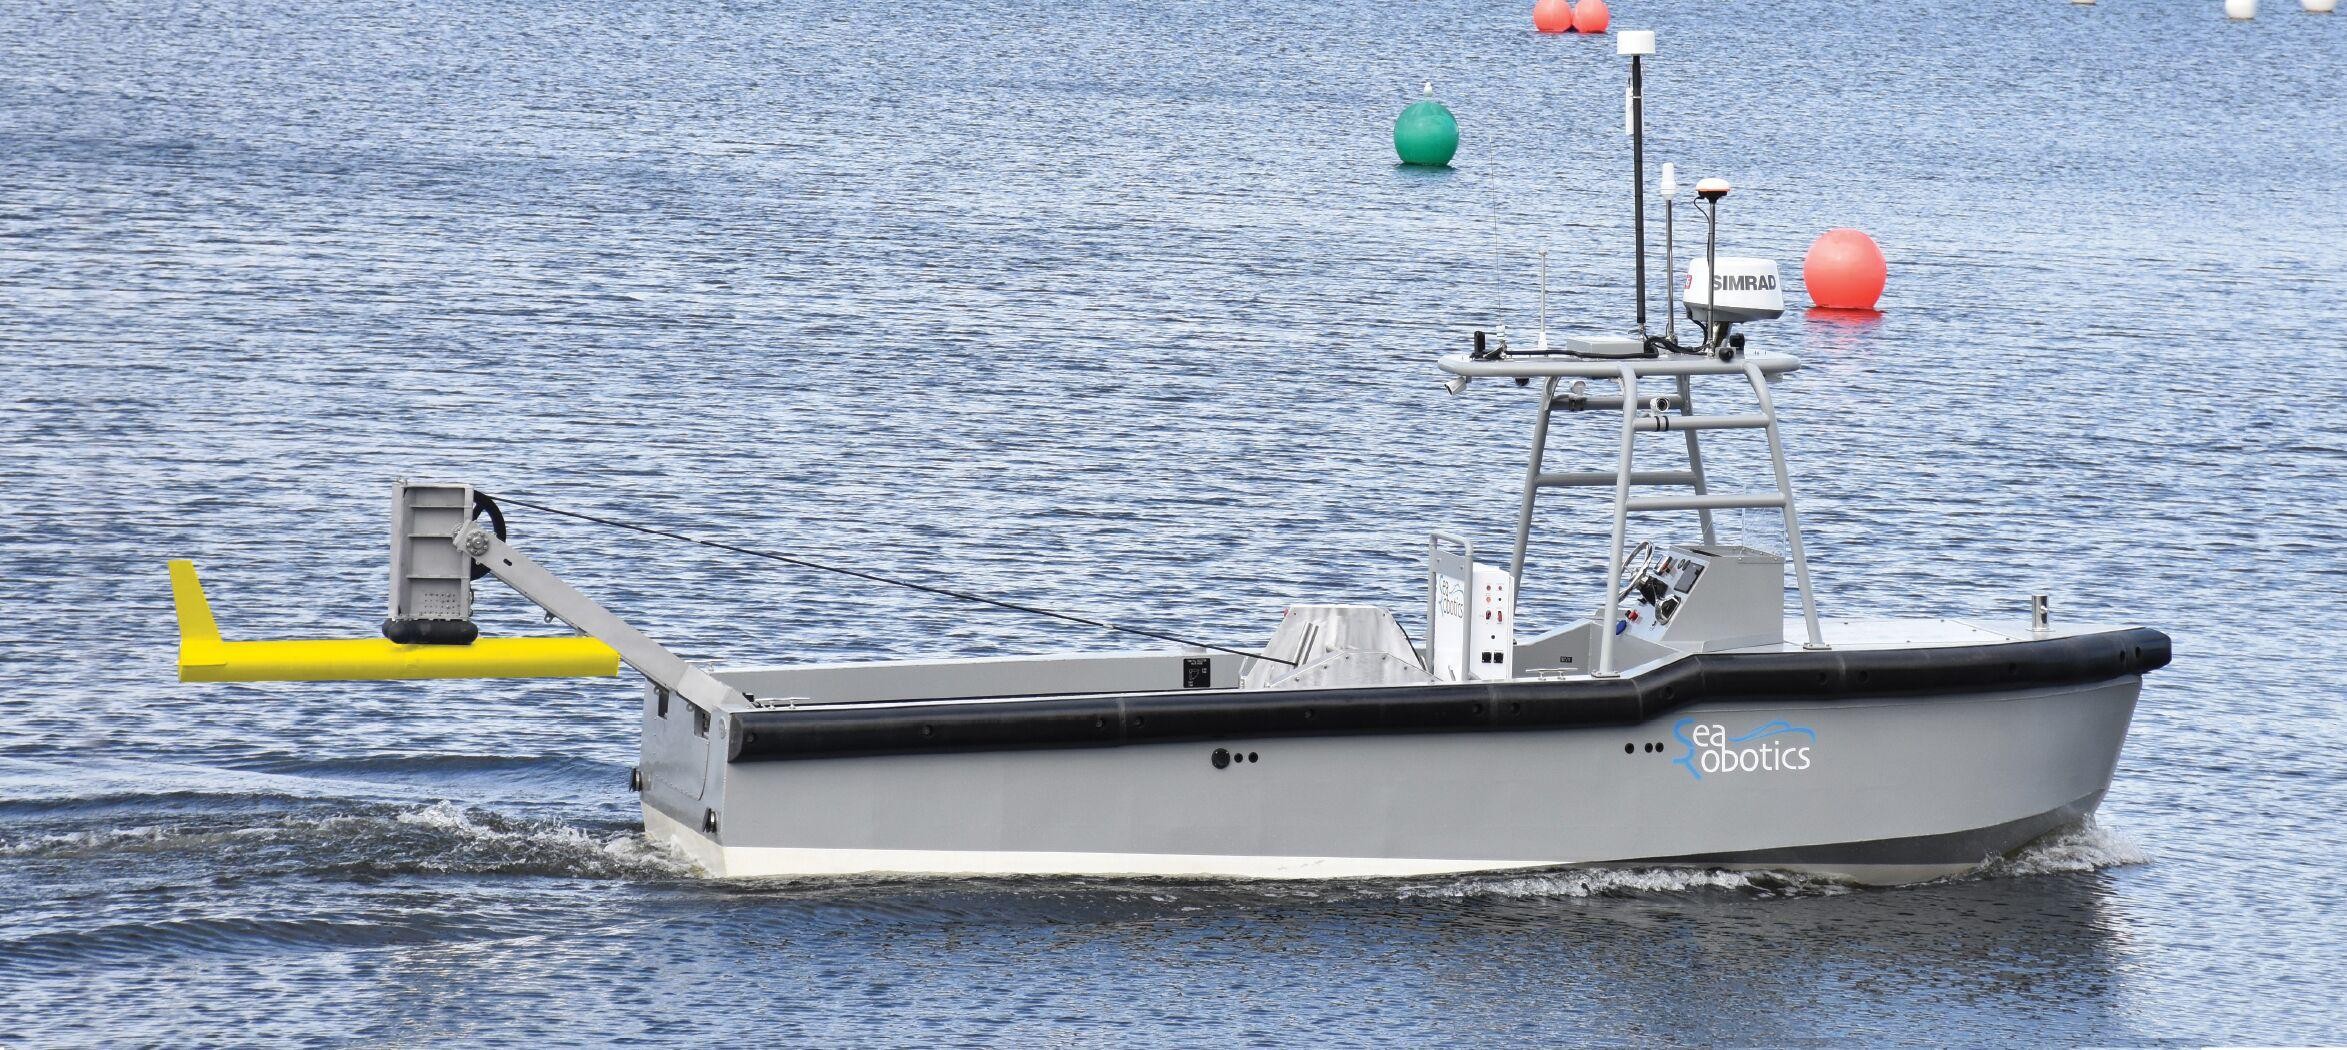 Torqeedo: new SeaRobotics hybrid-electric autonomous research boat